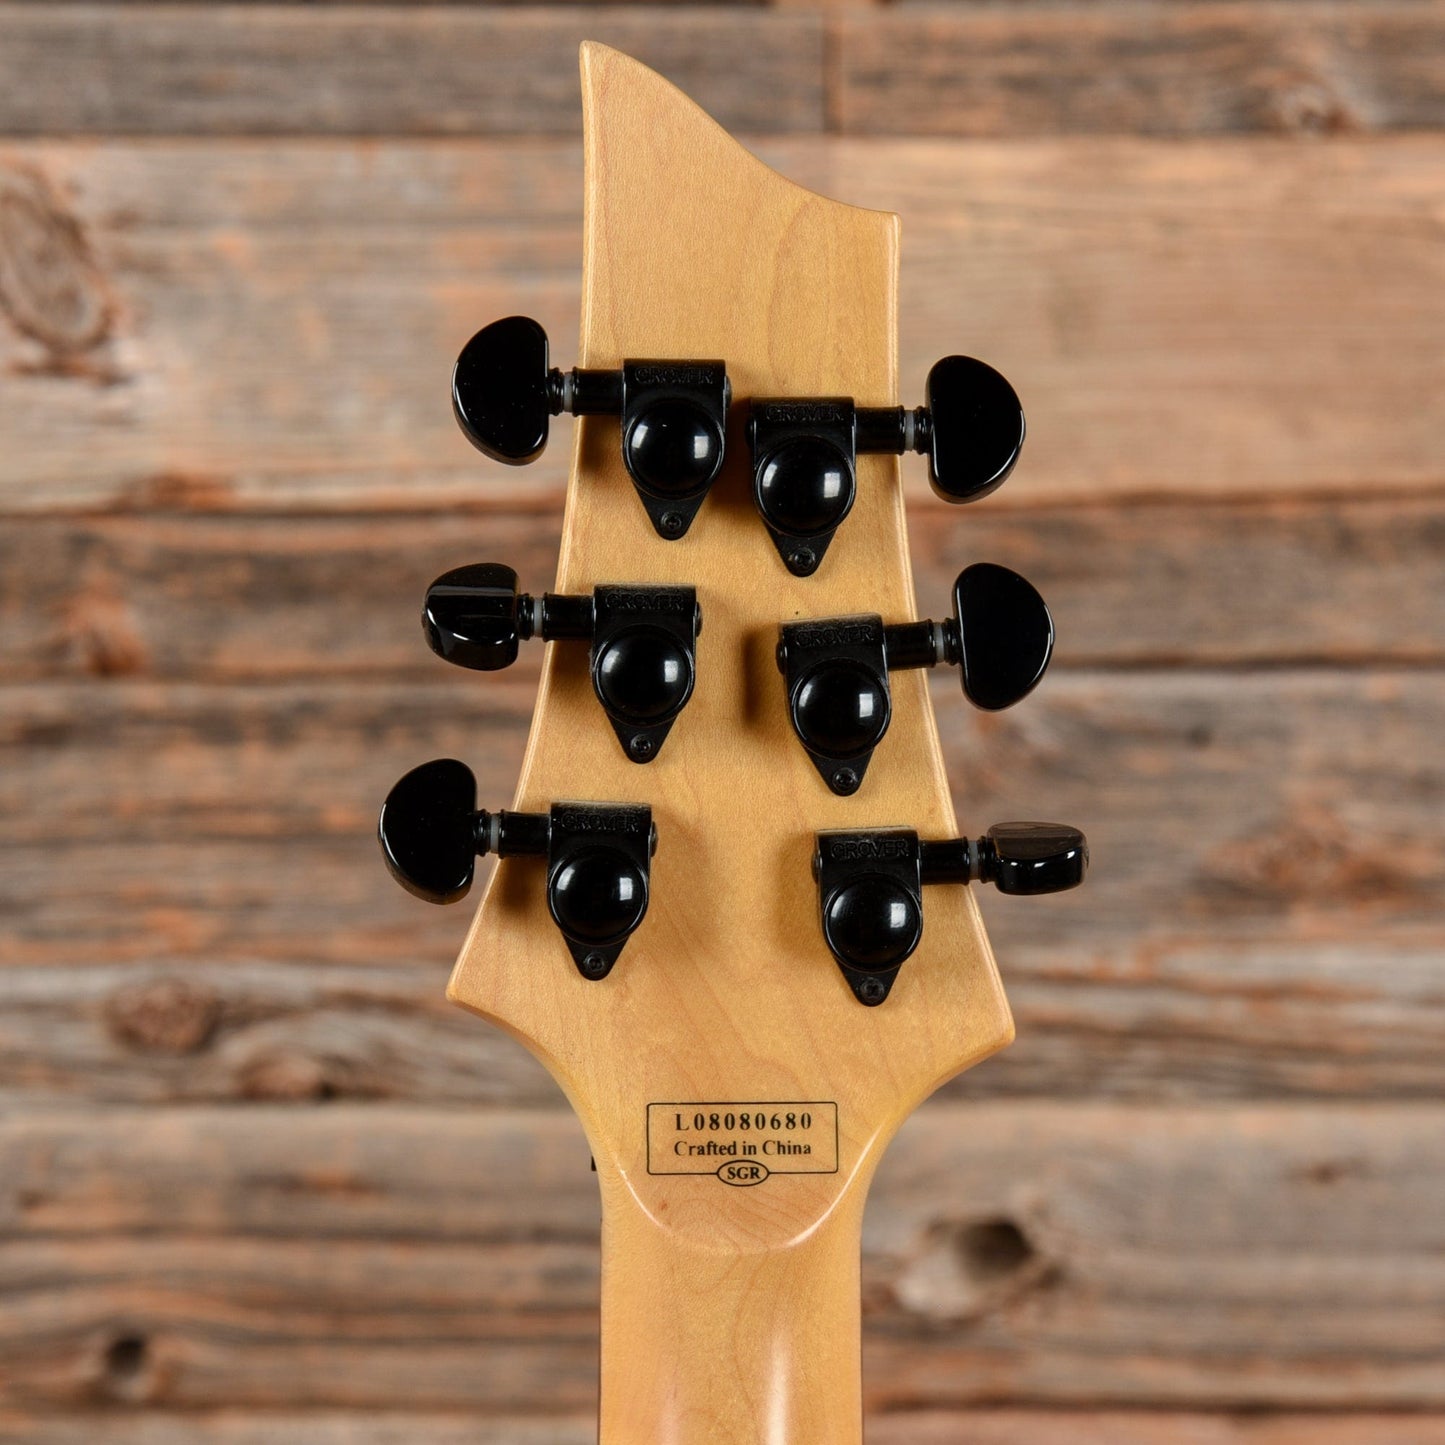 Schecter Diamon Series Black Electric Guitars / Solid Body